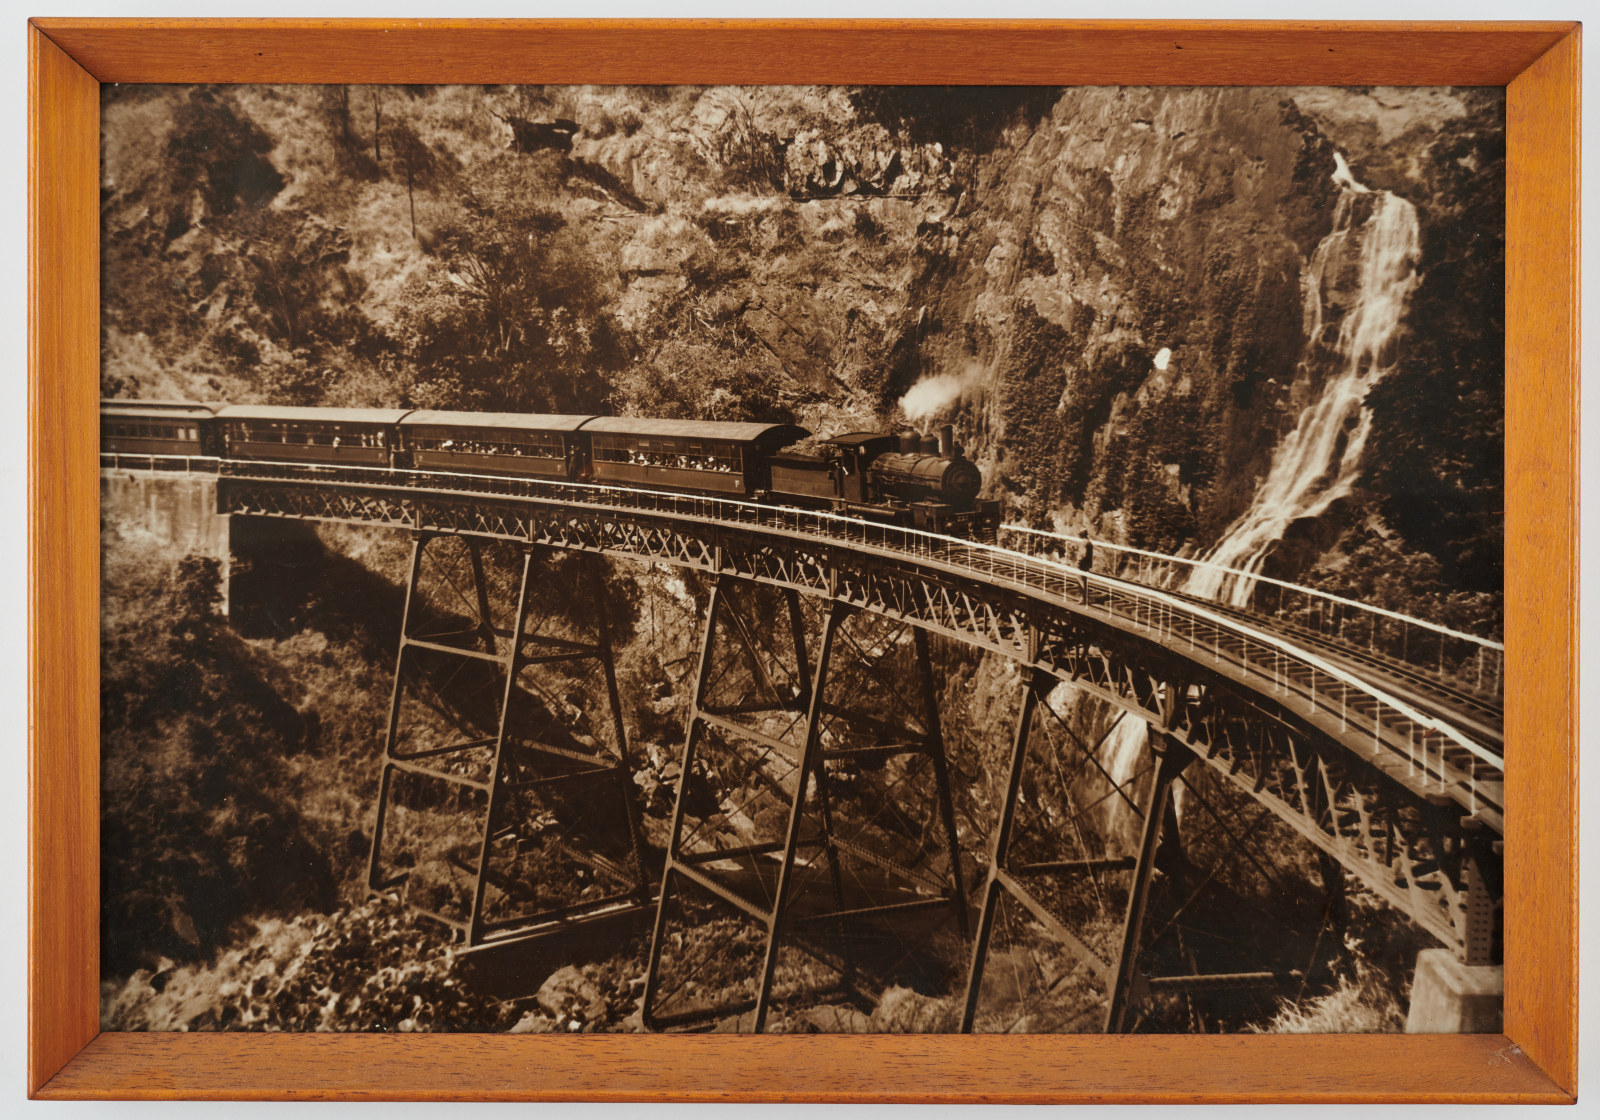 Framed photograph of Stoney Creek crossing, Kuranda, Queensland, provenance of Ellen Marshall, former resident of No 62 Susannah Place, 1962-1990